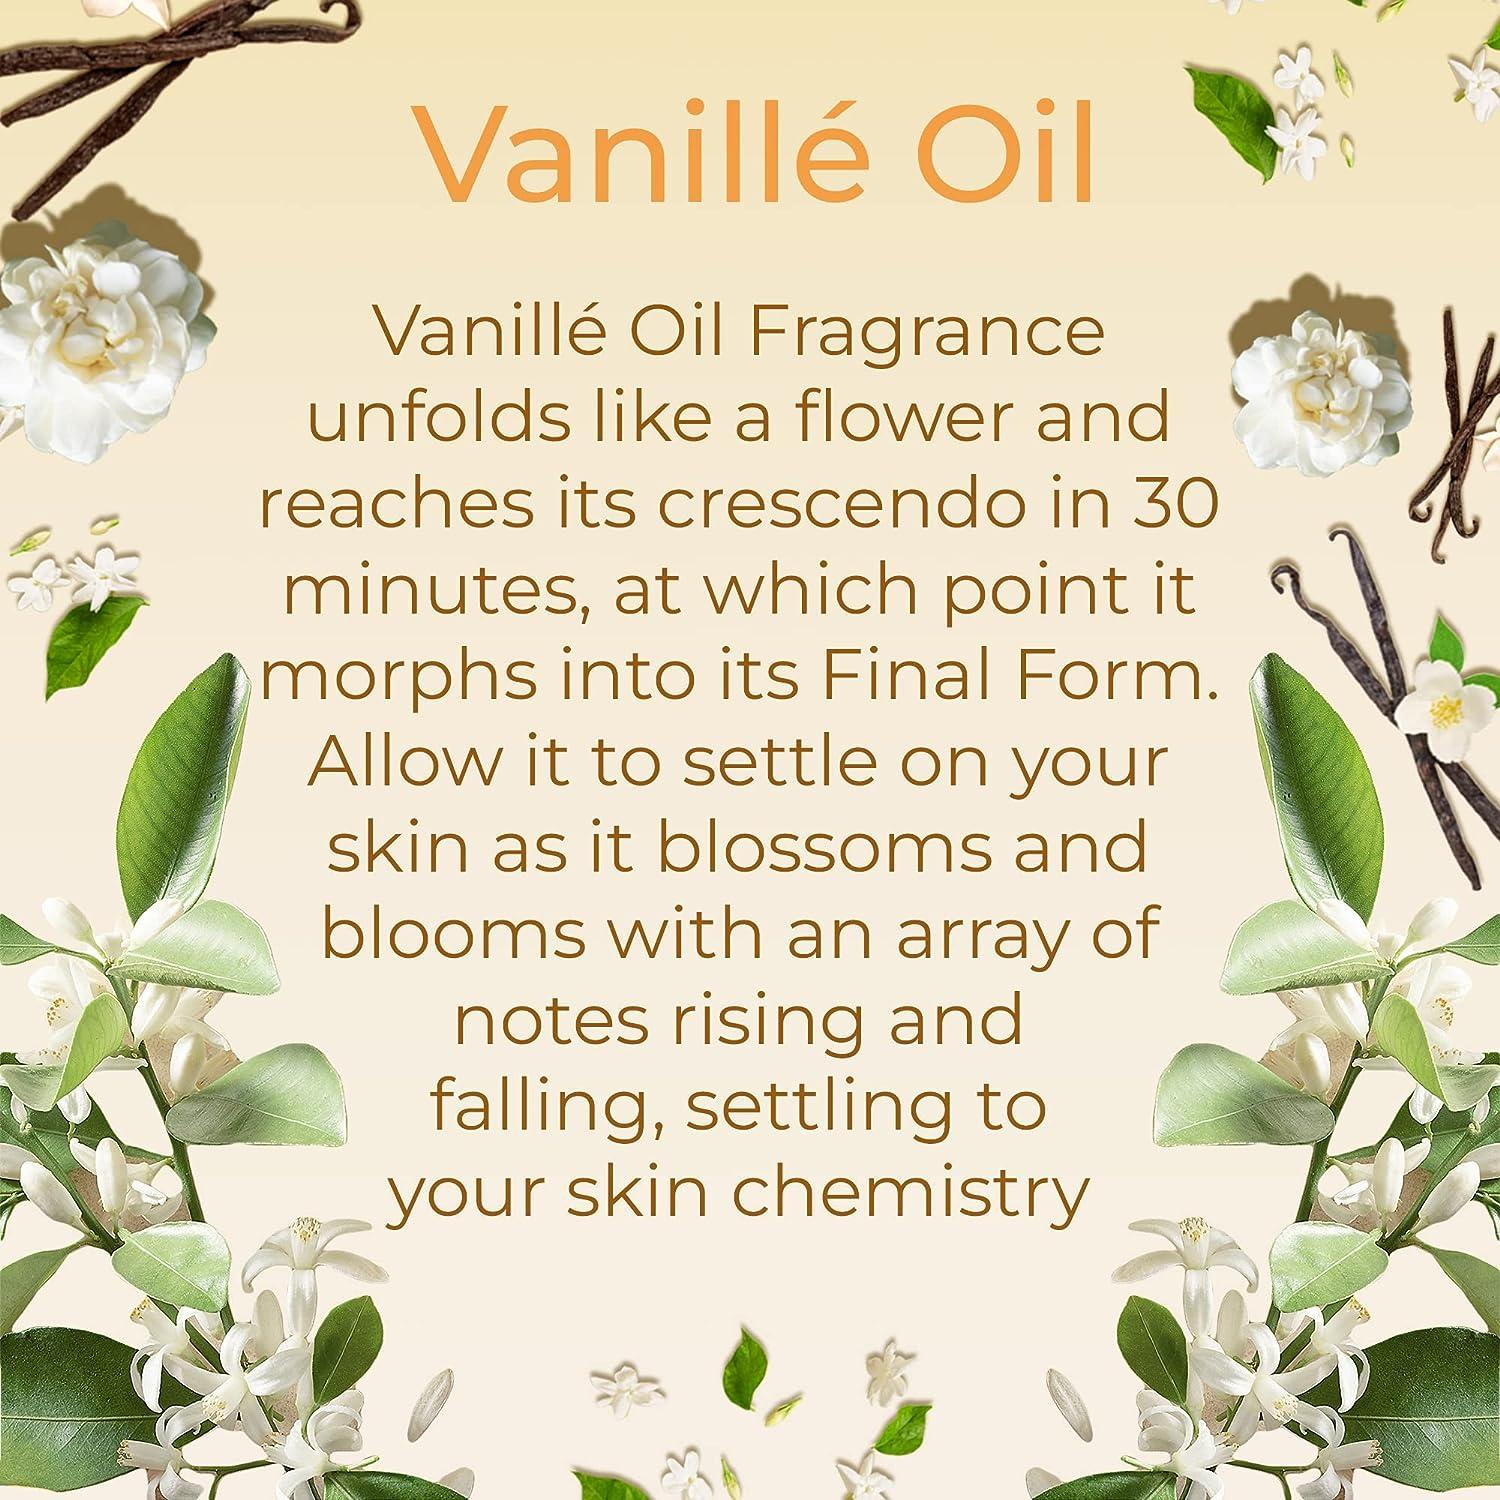 Jasmine and Vanilla Diffuser Oil - essential oil blend